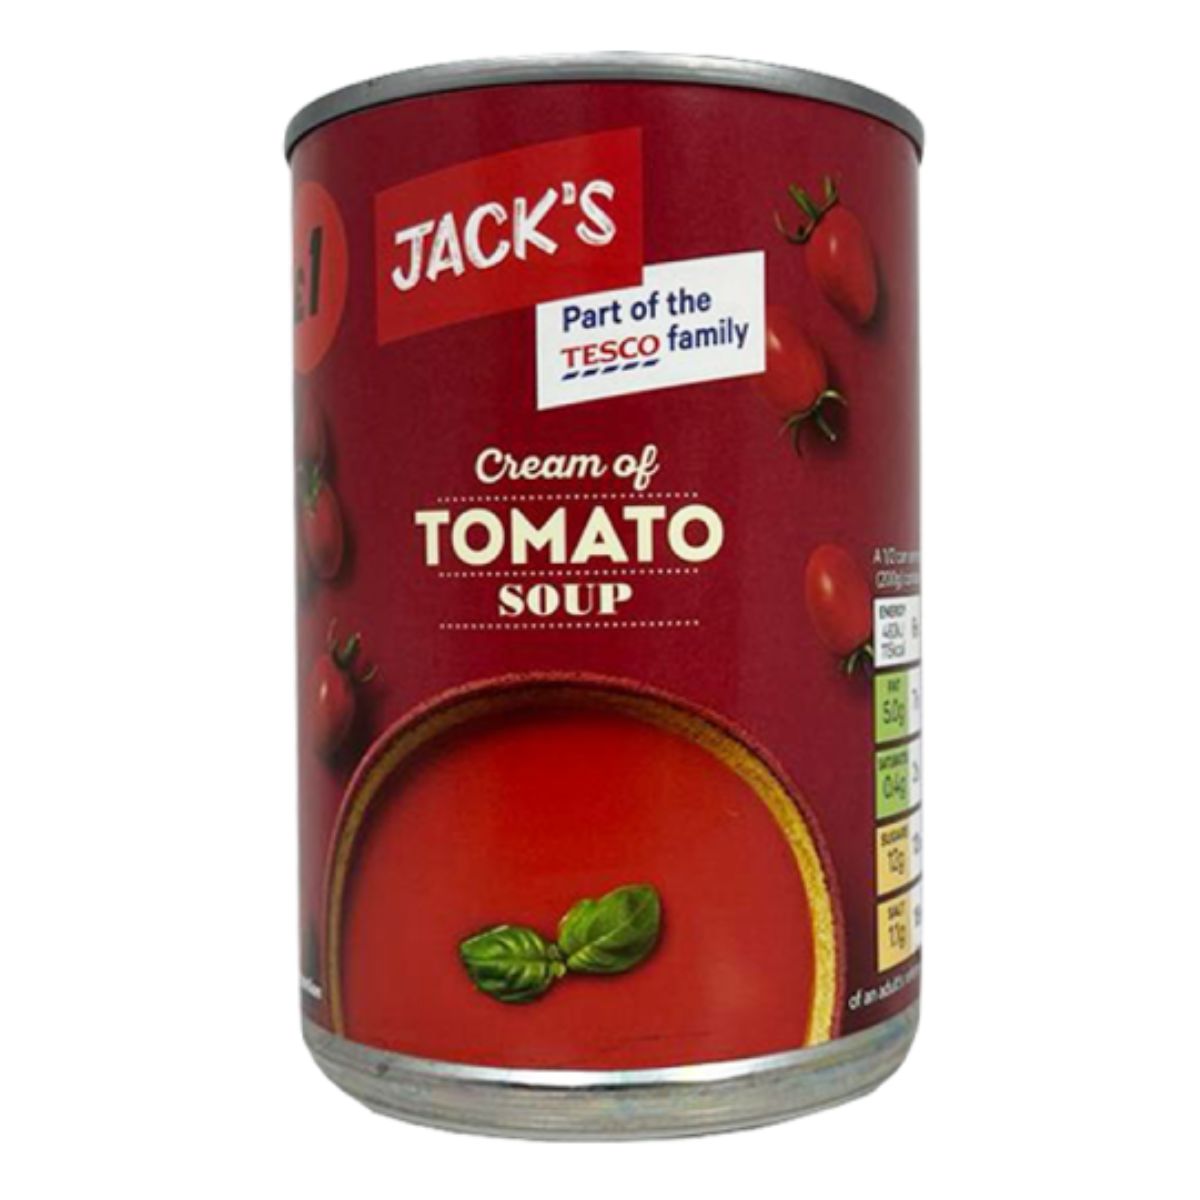 Jacks - Cream of Tomato Soup - 400g.